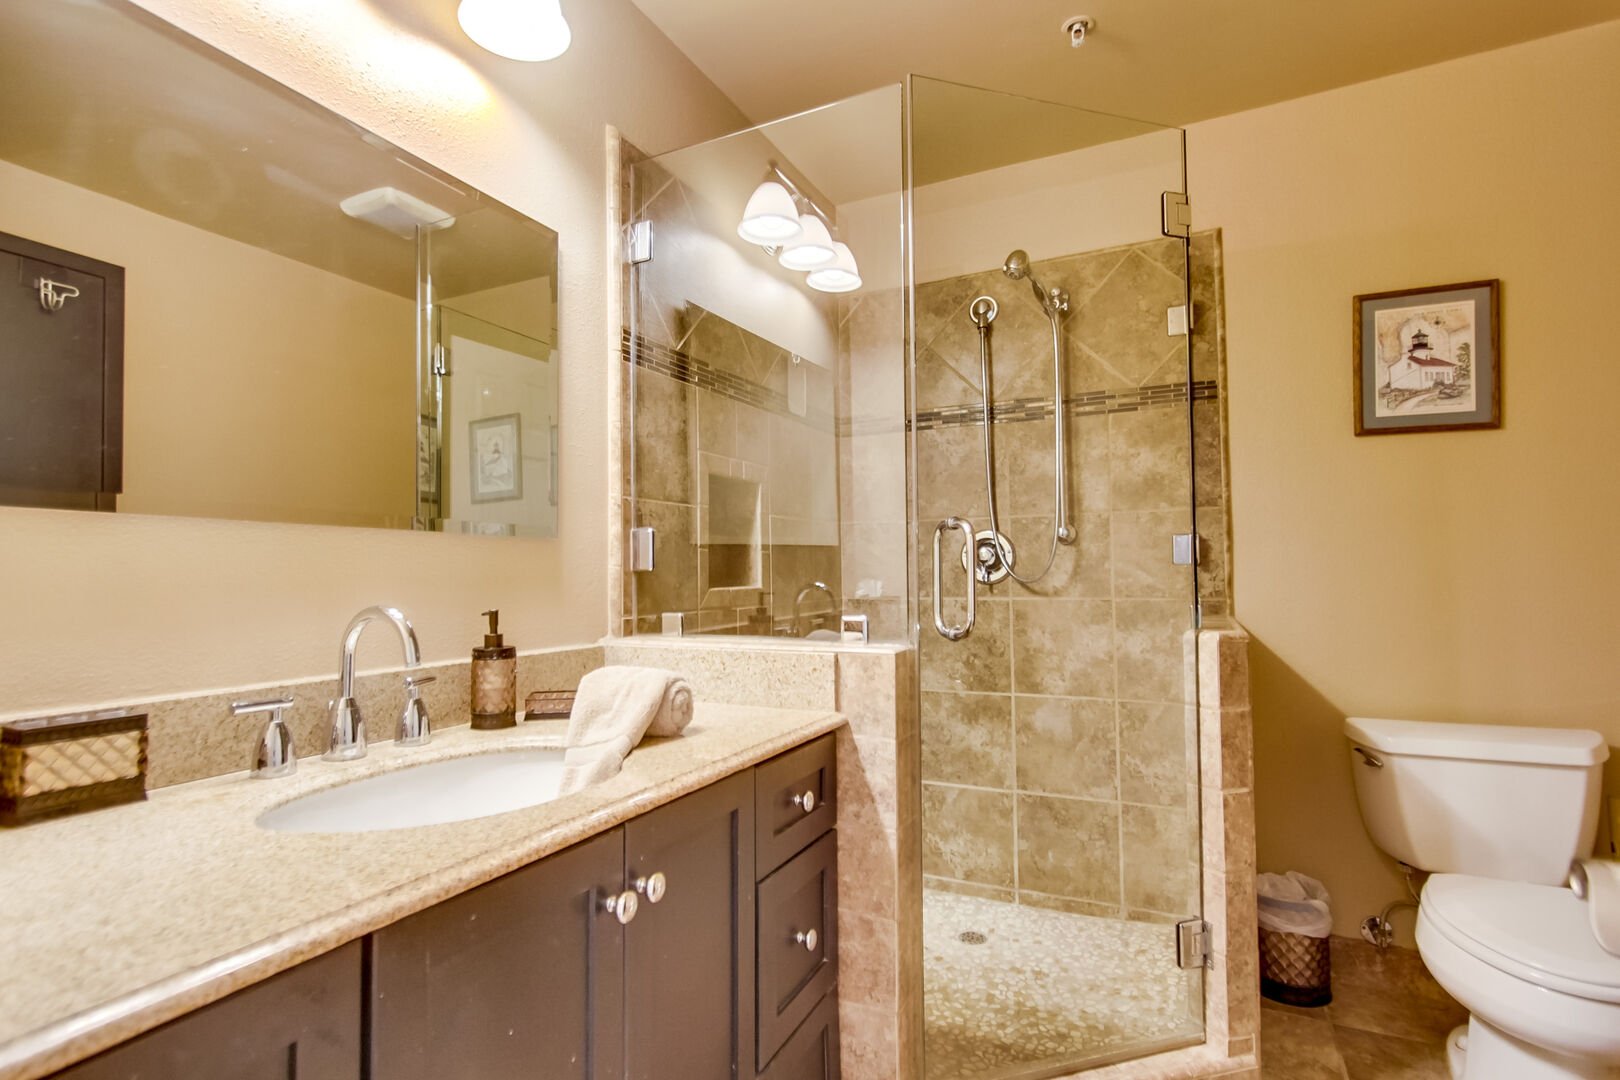 Bathroom with shower, vanity sink, mirror and overhead lighting